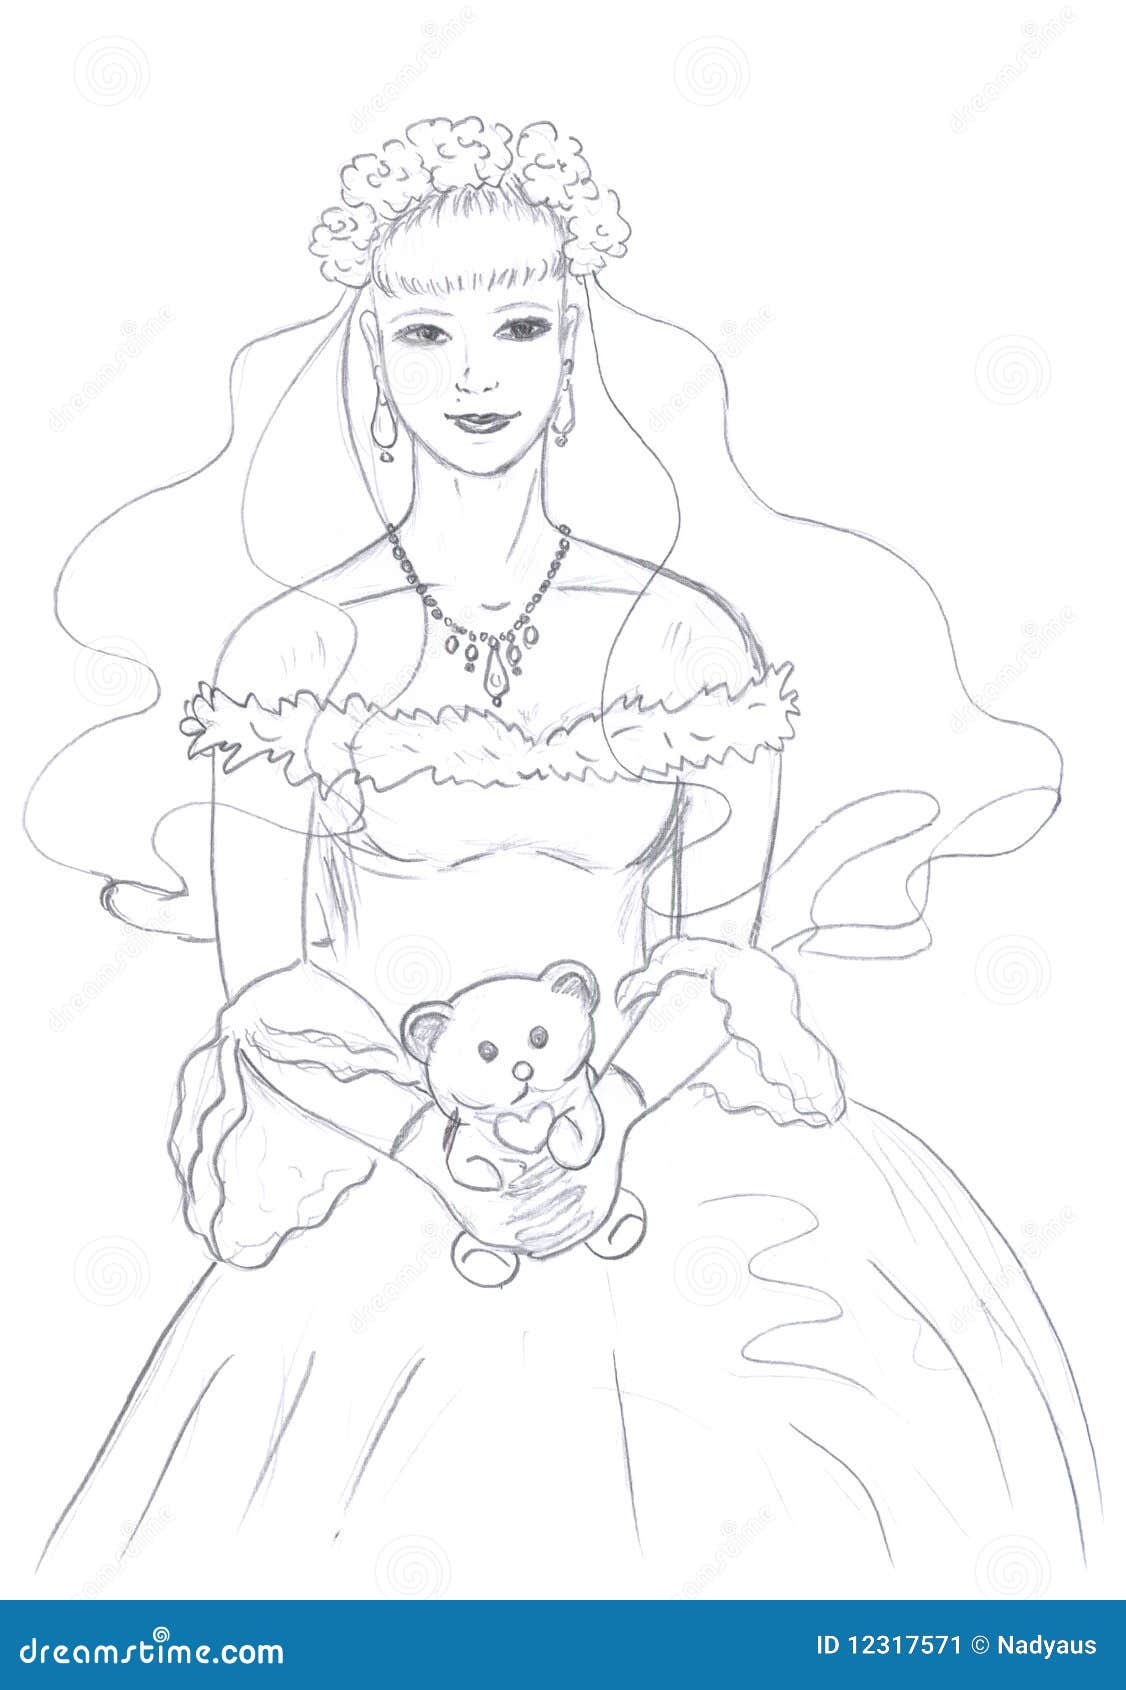 Bride sketch stock illustration. Illustration of veil - 12317571